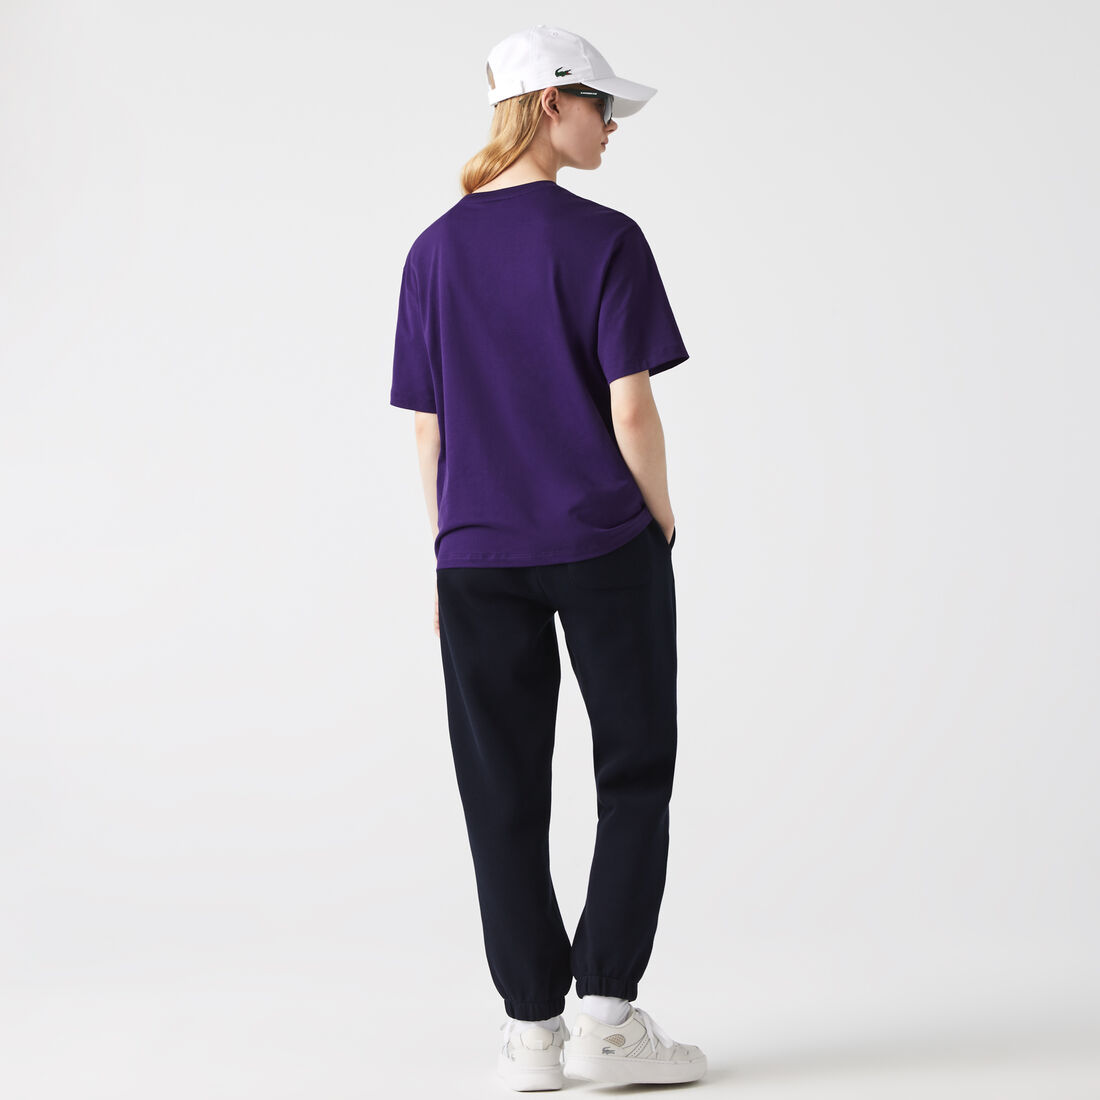 Lacoste Crew Neck Premium Baumwoll T-shirts Damen Lila | ZKLN-49721